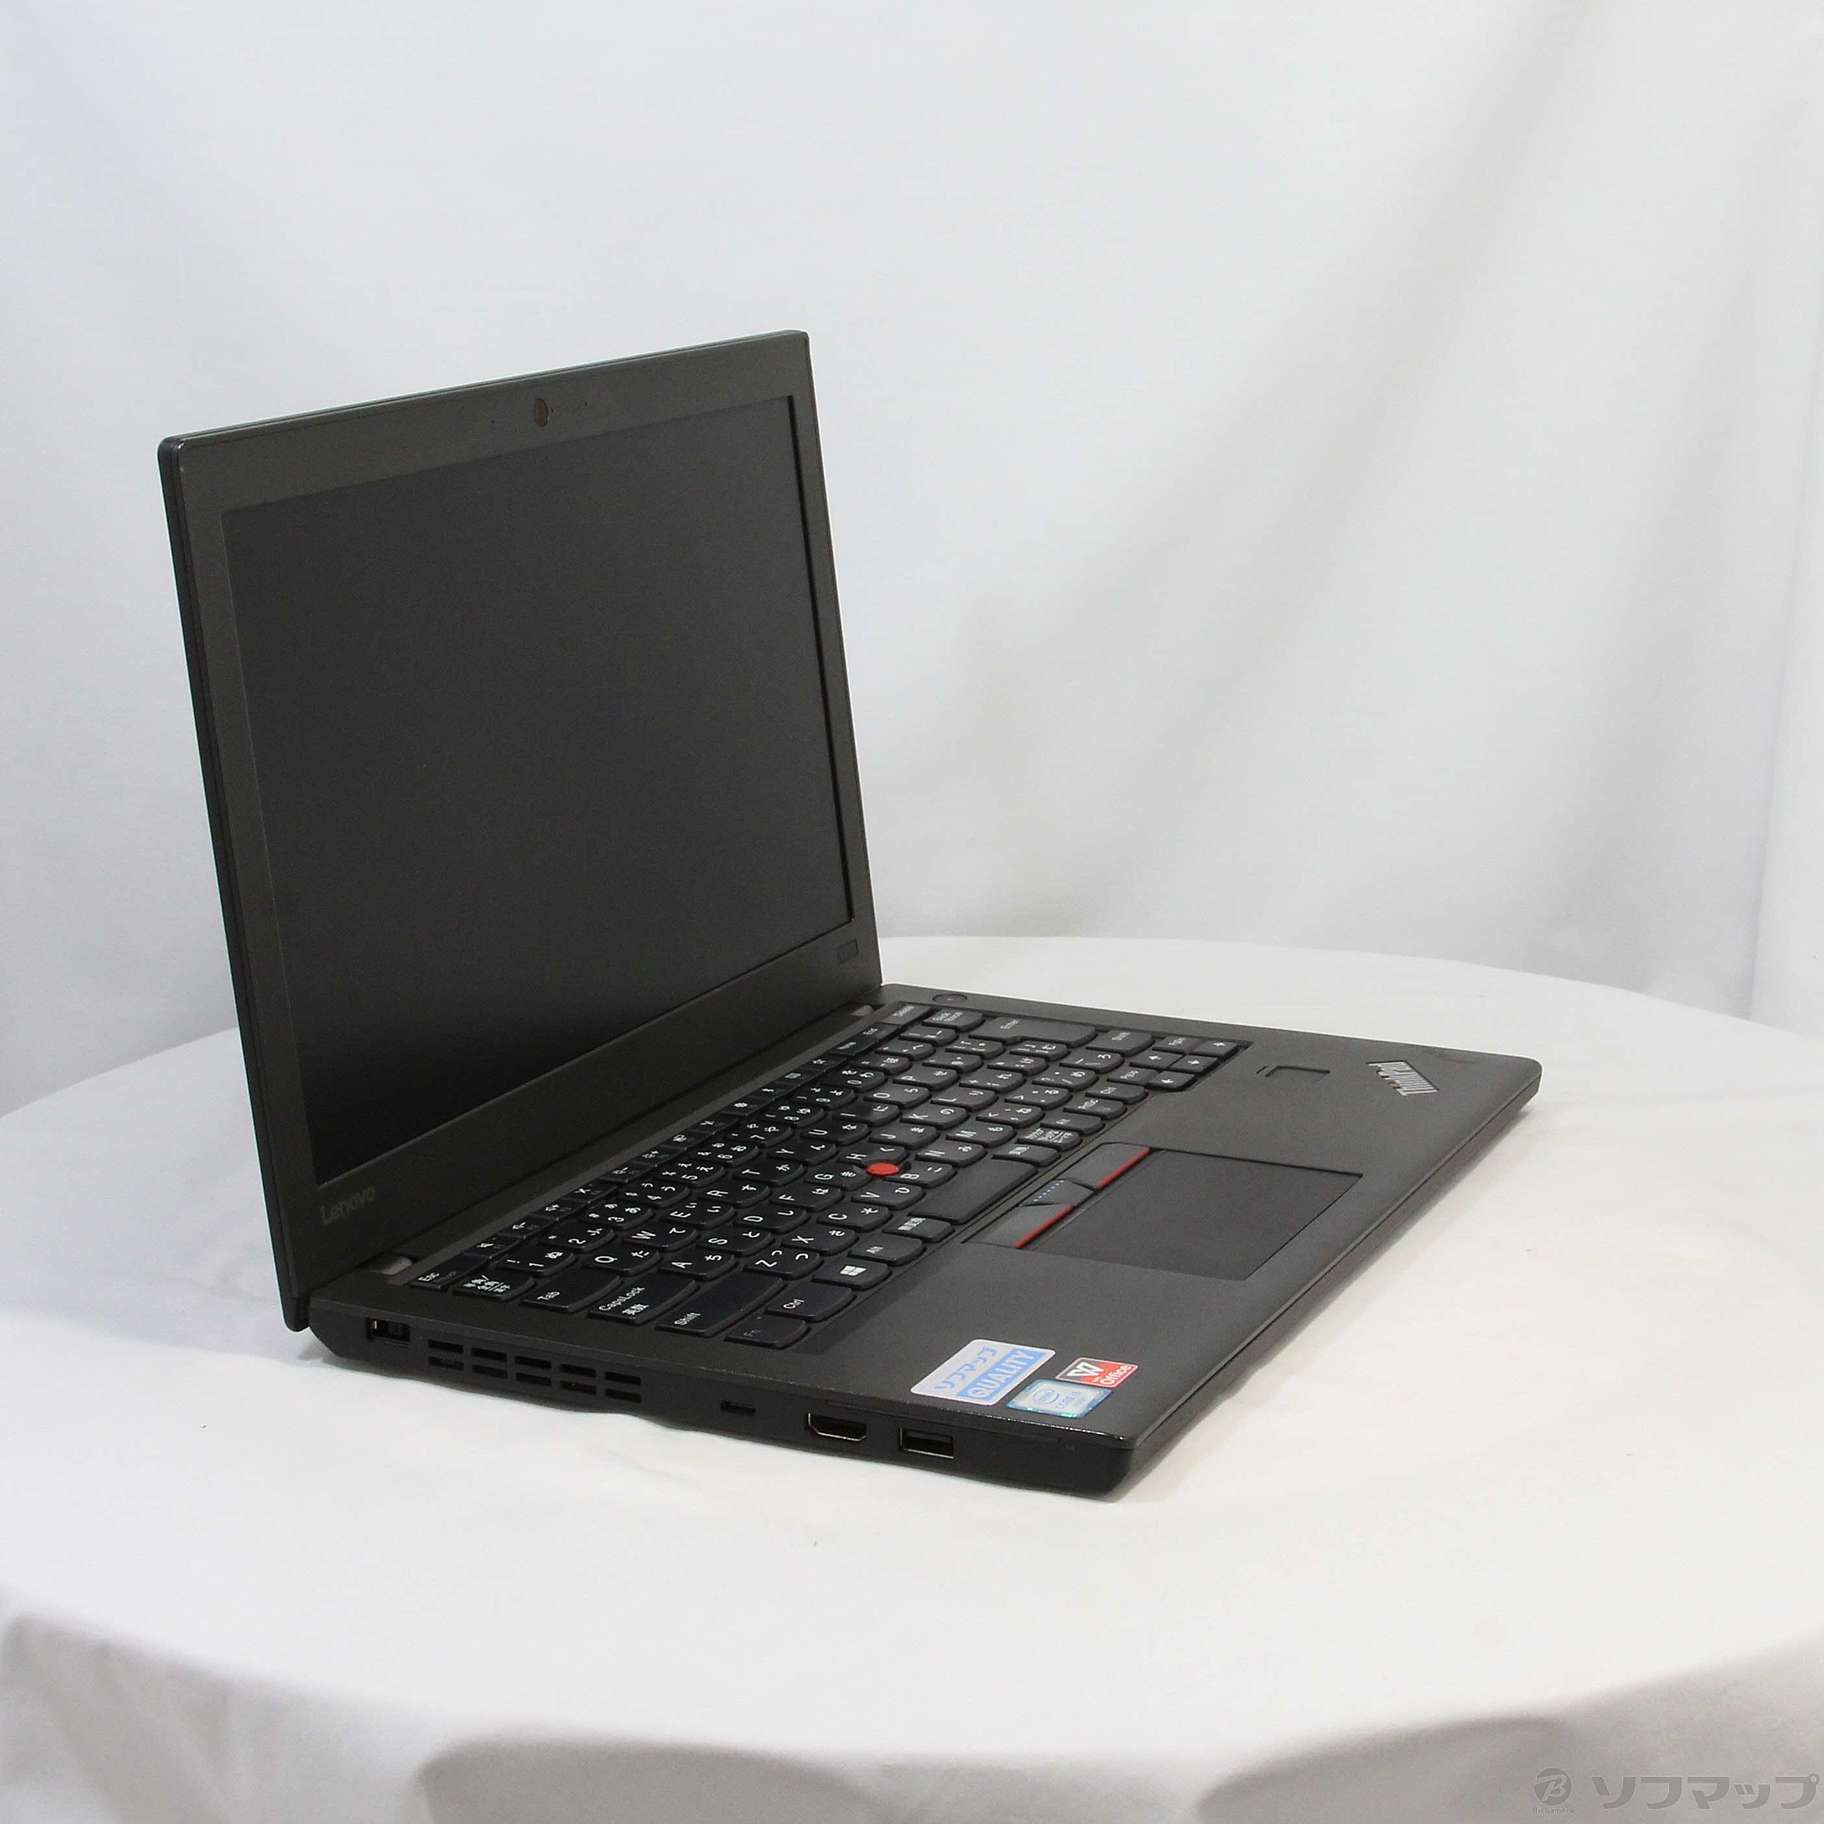 単品販売／受注生産 ThinkPad X270 20K60012JP Windowsノート